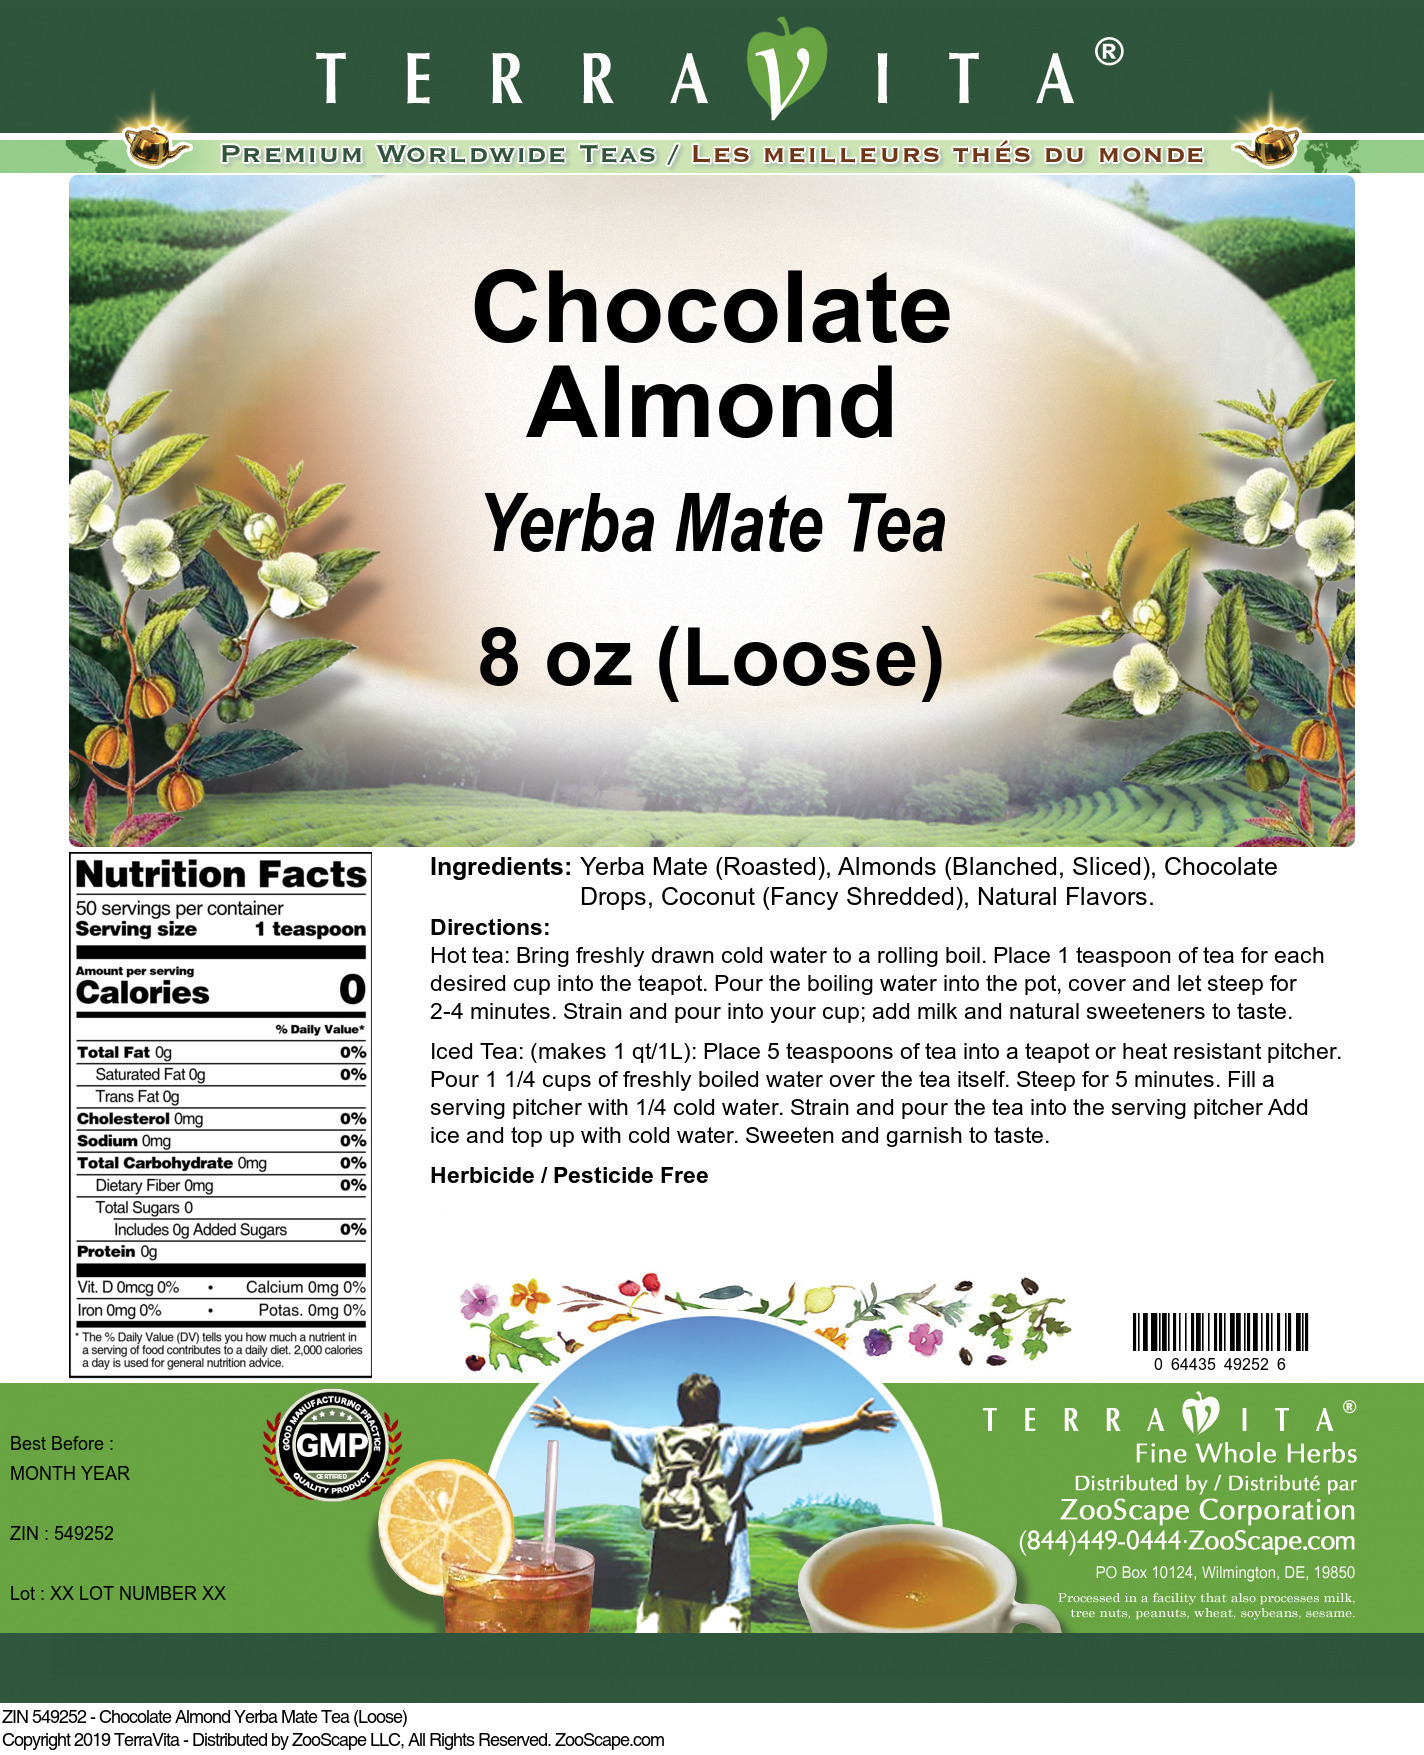 Chocolate Almond Yerba Mate Tea (Loose) - Label